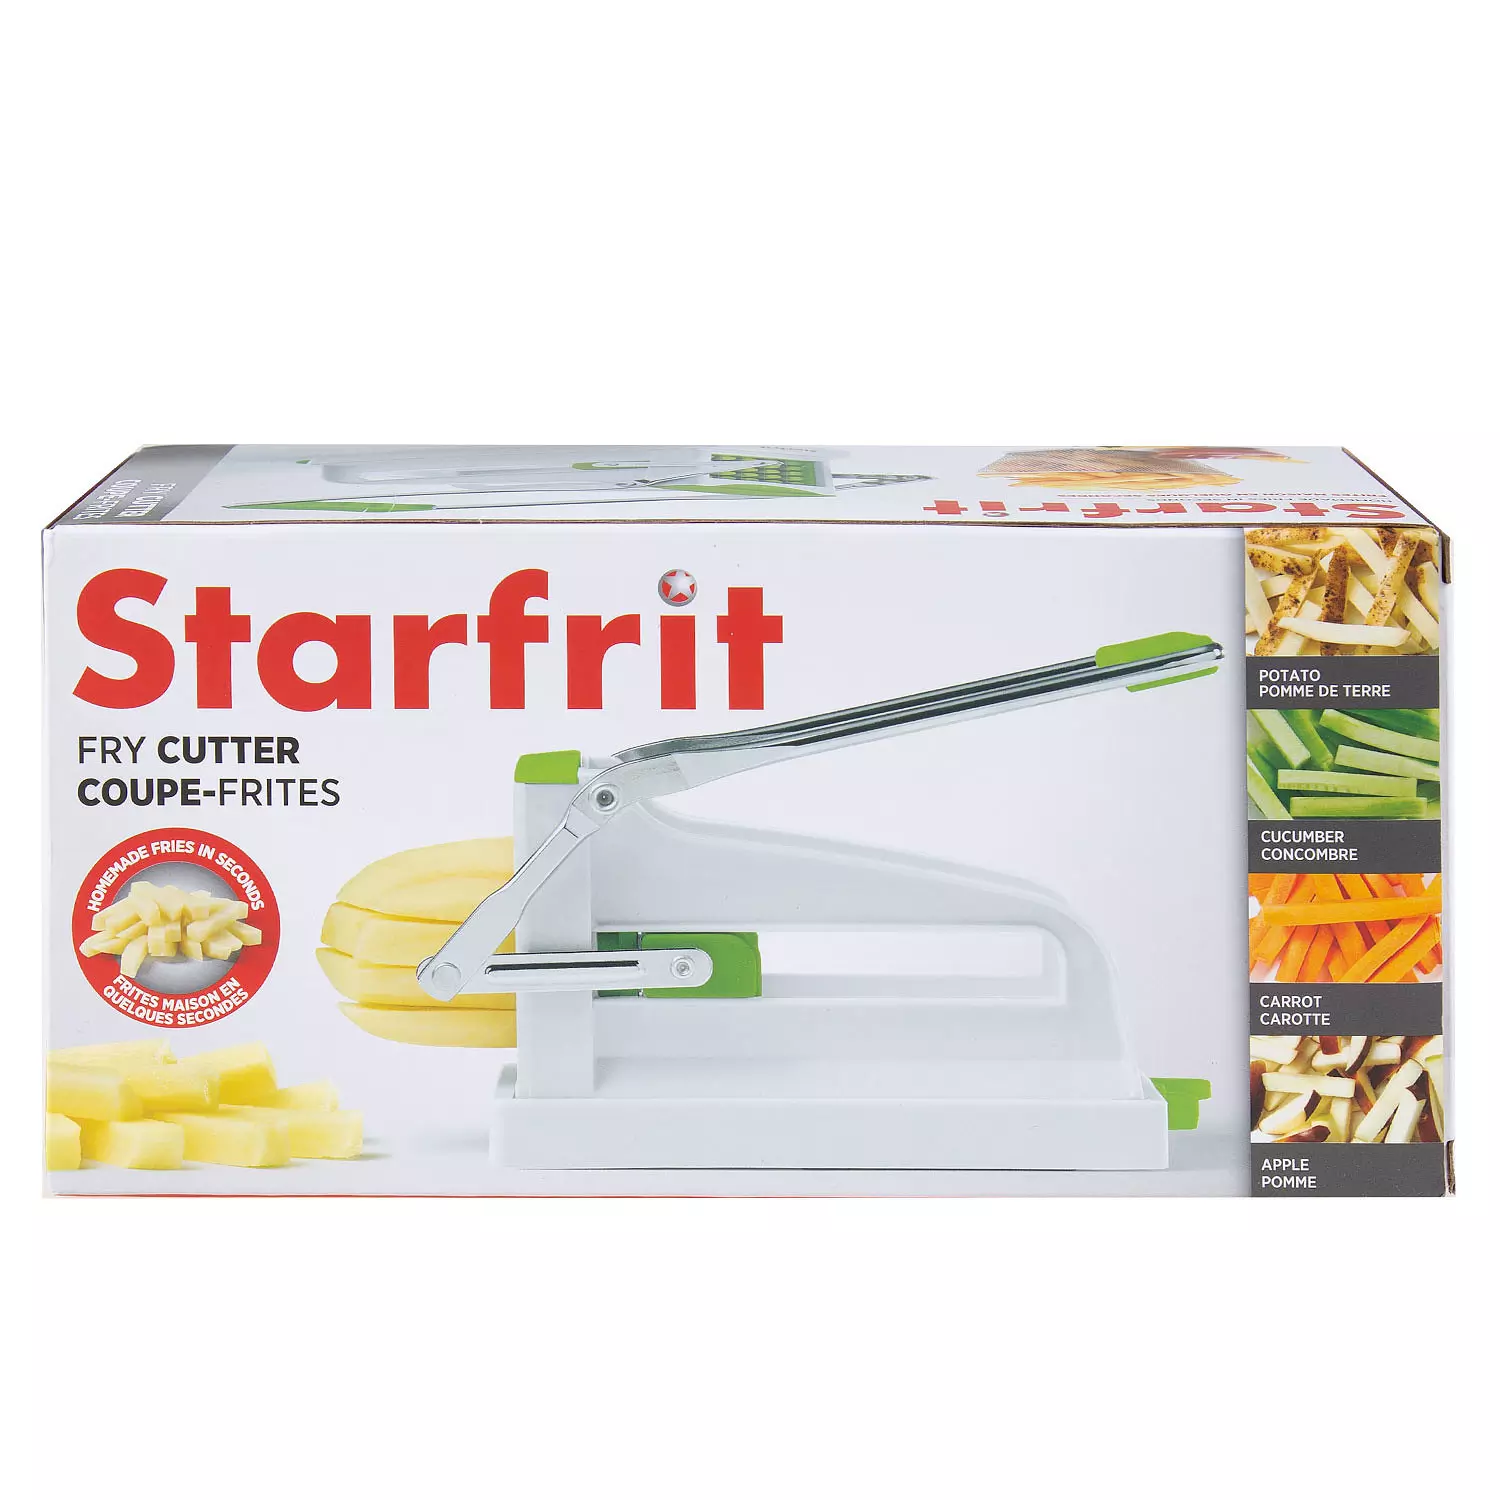 Coupe-frites Starfrit